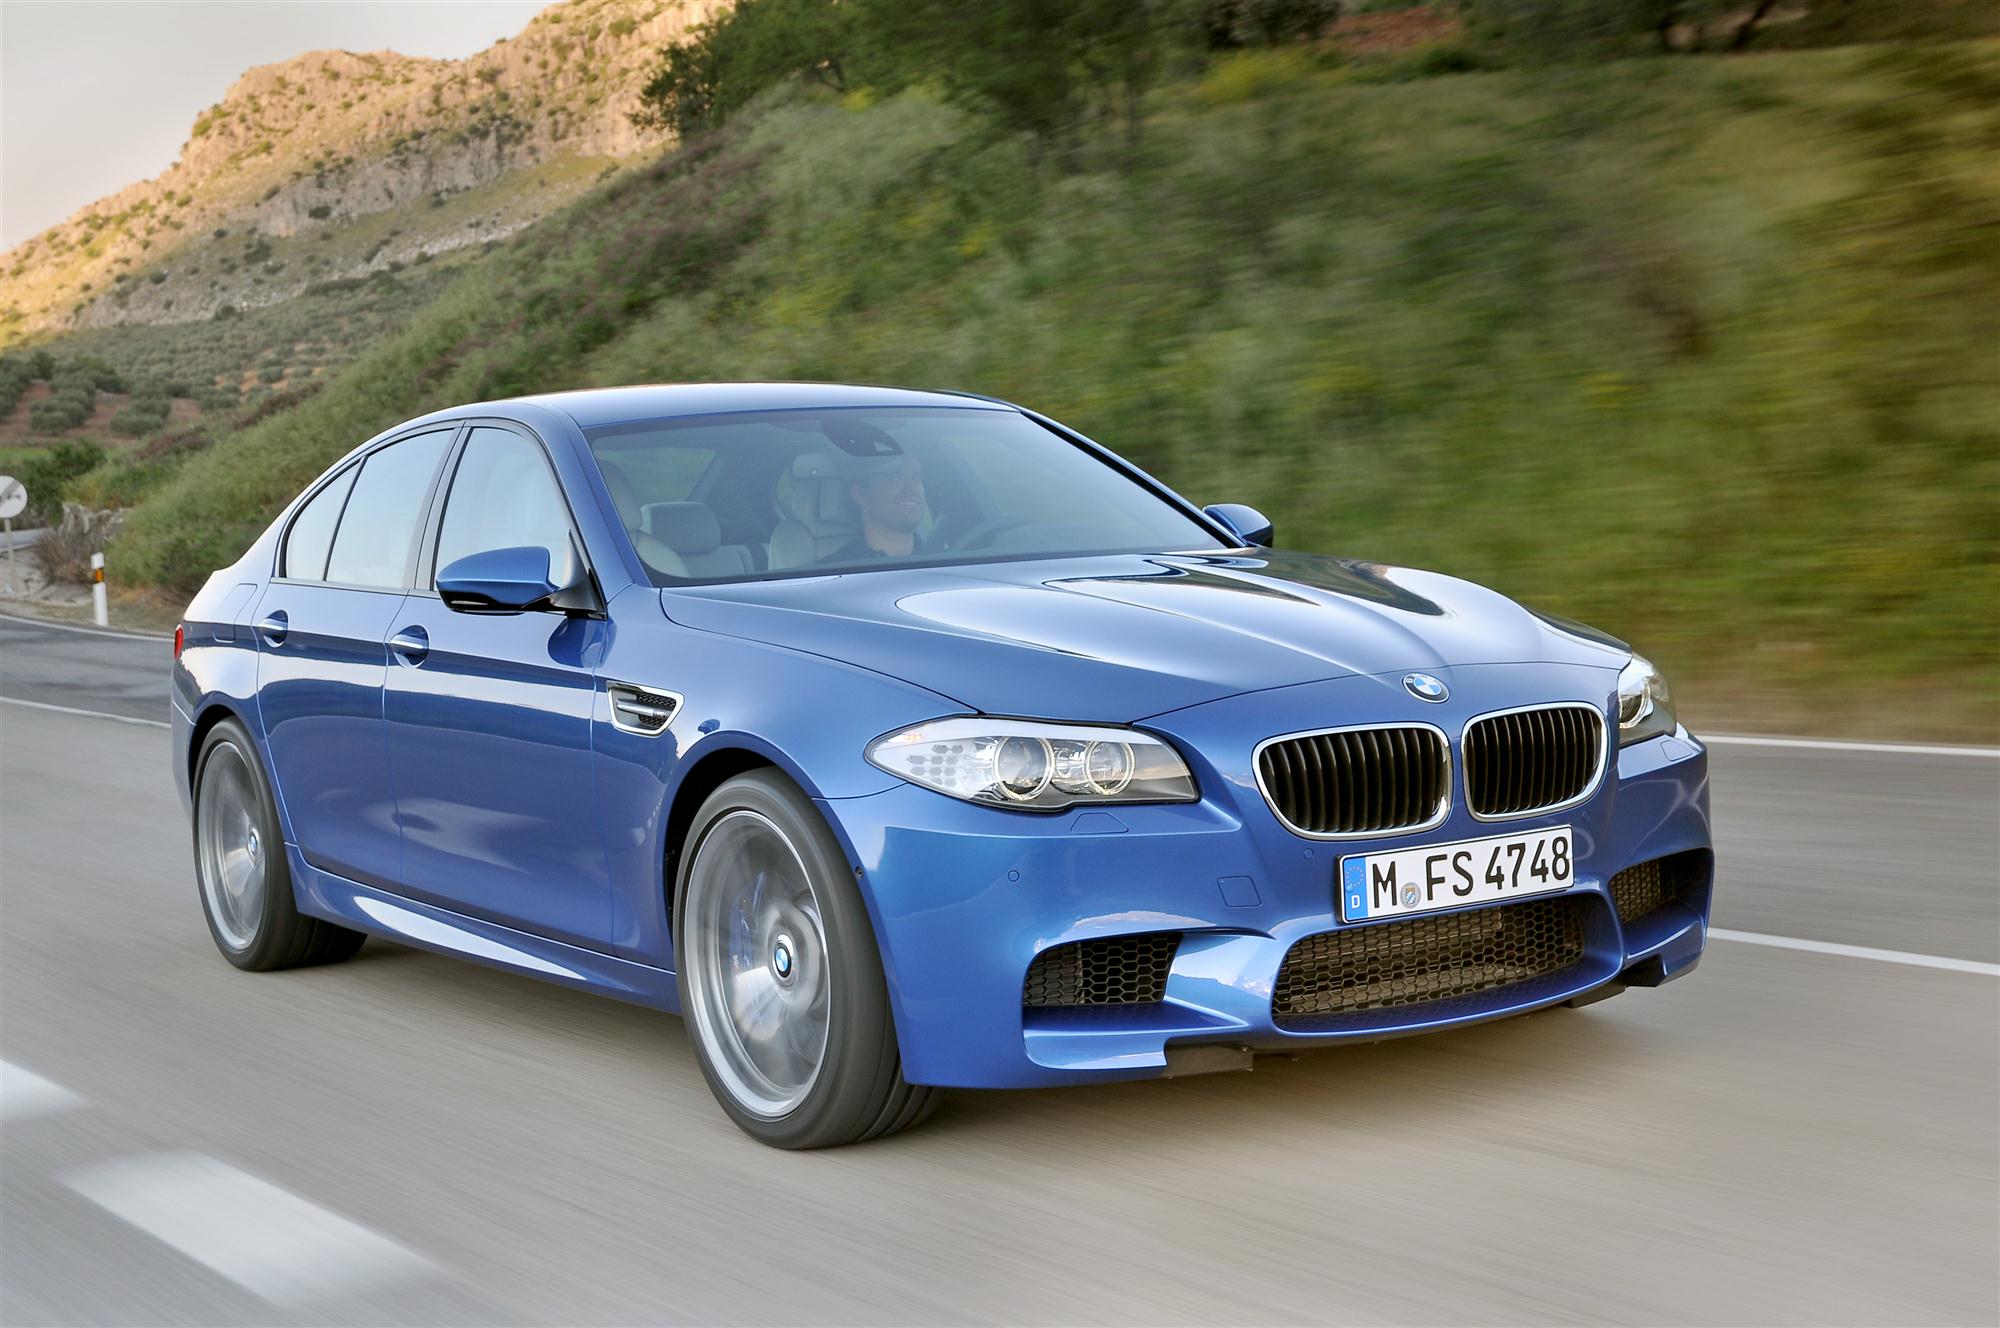 BMW Considering Carbon Ceramic Brakes For 2012 M5?